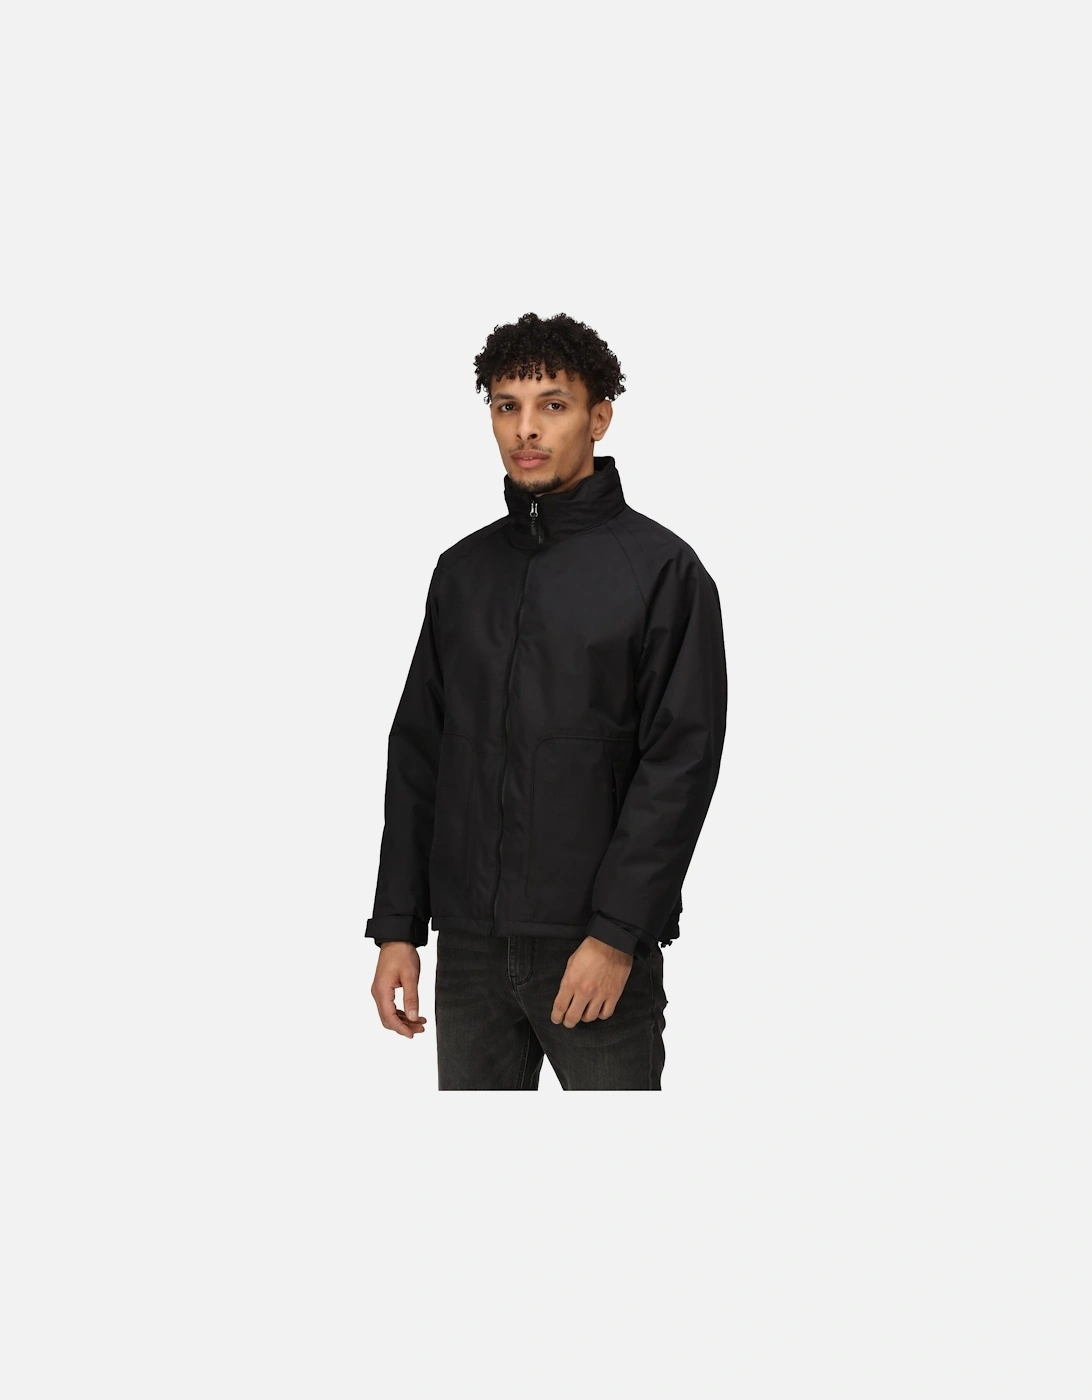 Hudson Waterproof Windproof Jacket / Mens Jackets